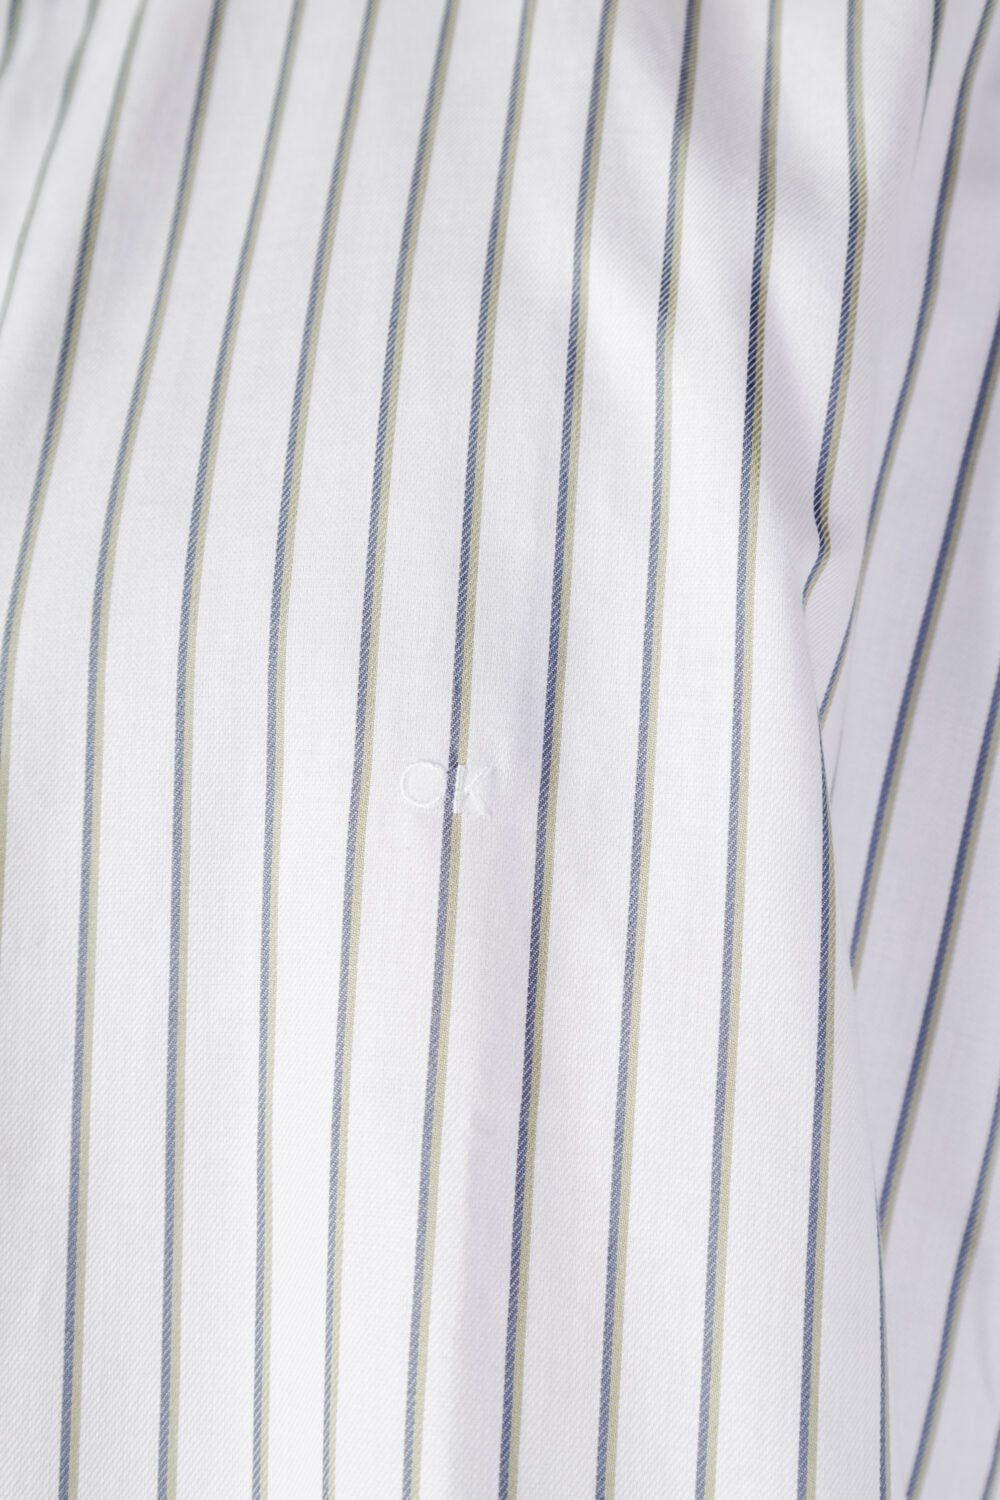 Camicia manica lunga Calvin Klein twill stripe fitted Verde - Foto 4